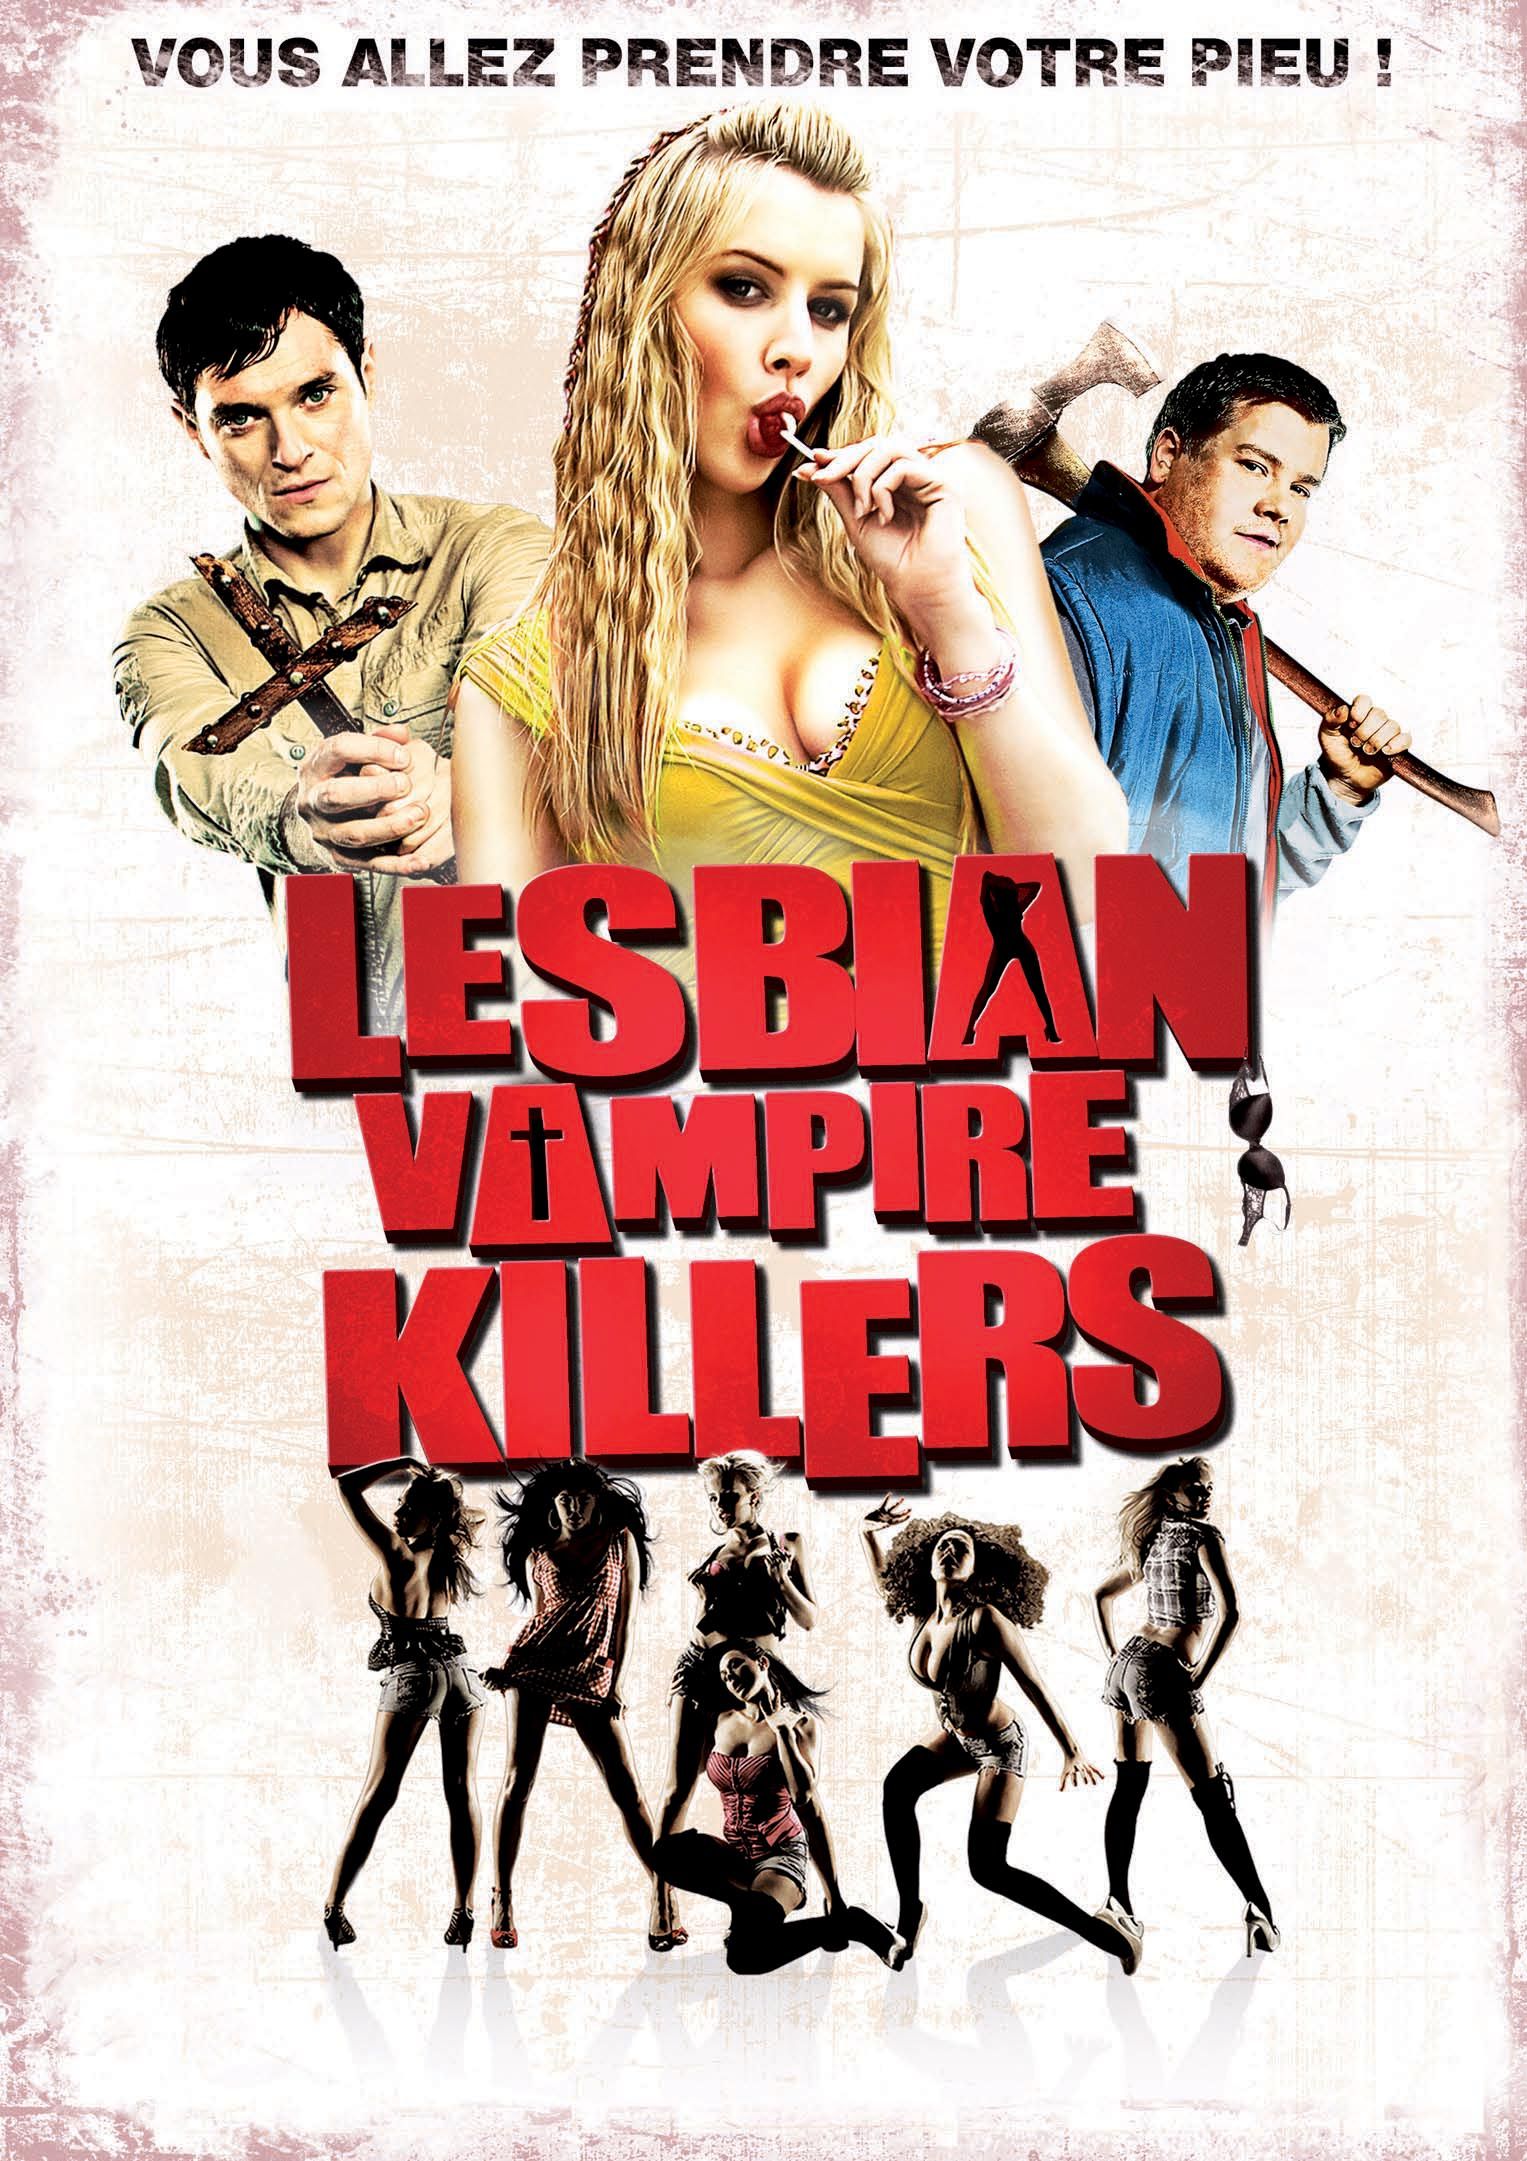 Lesbian vampire killers [Sub-ITA] (2009)